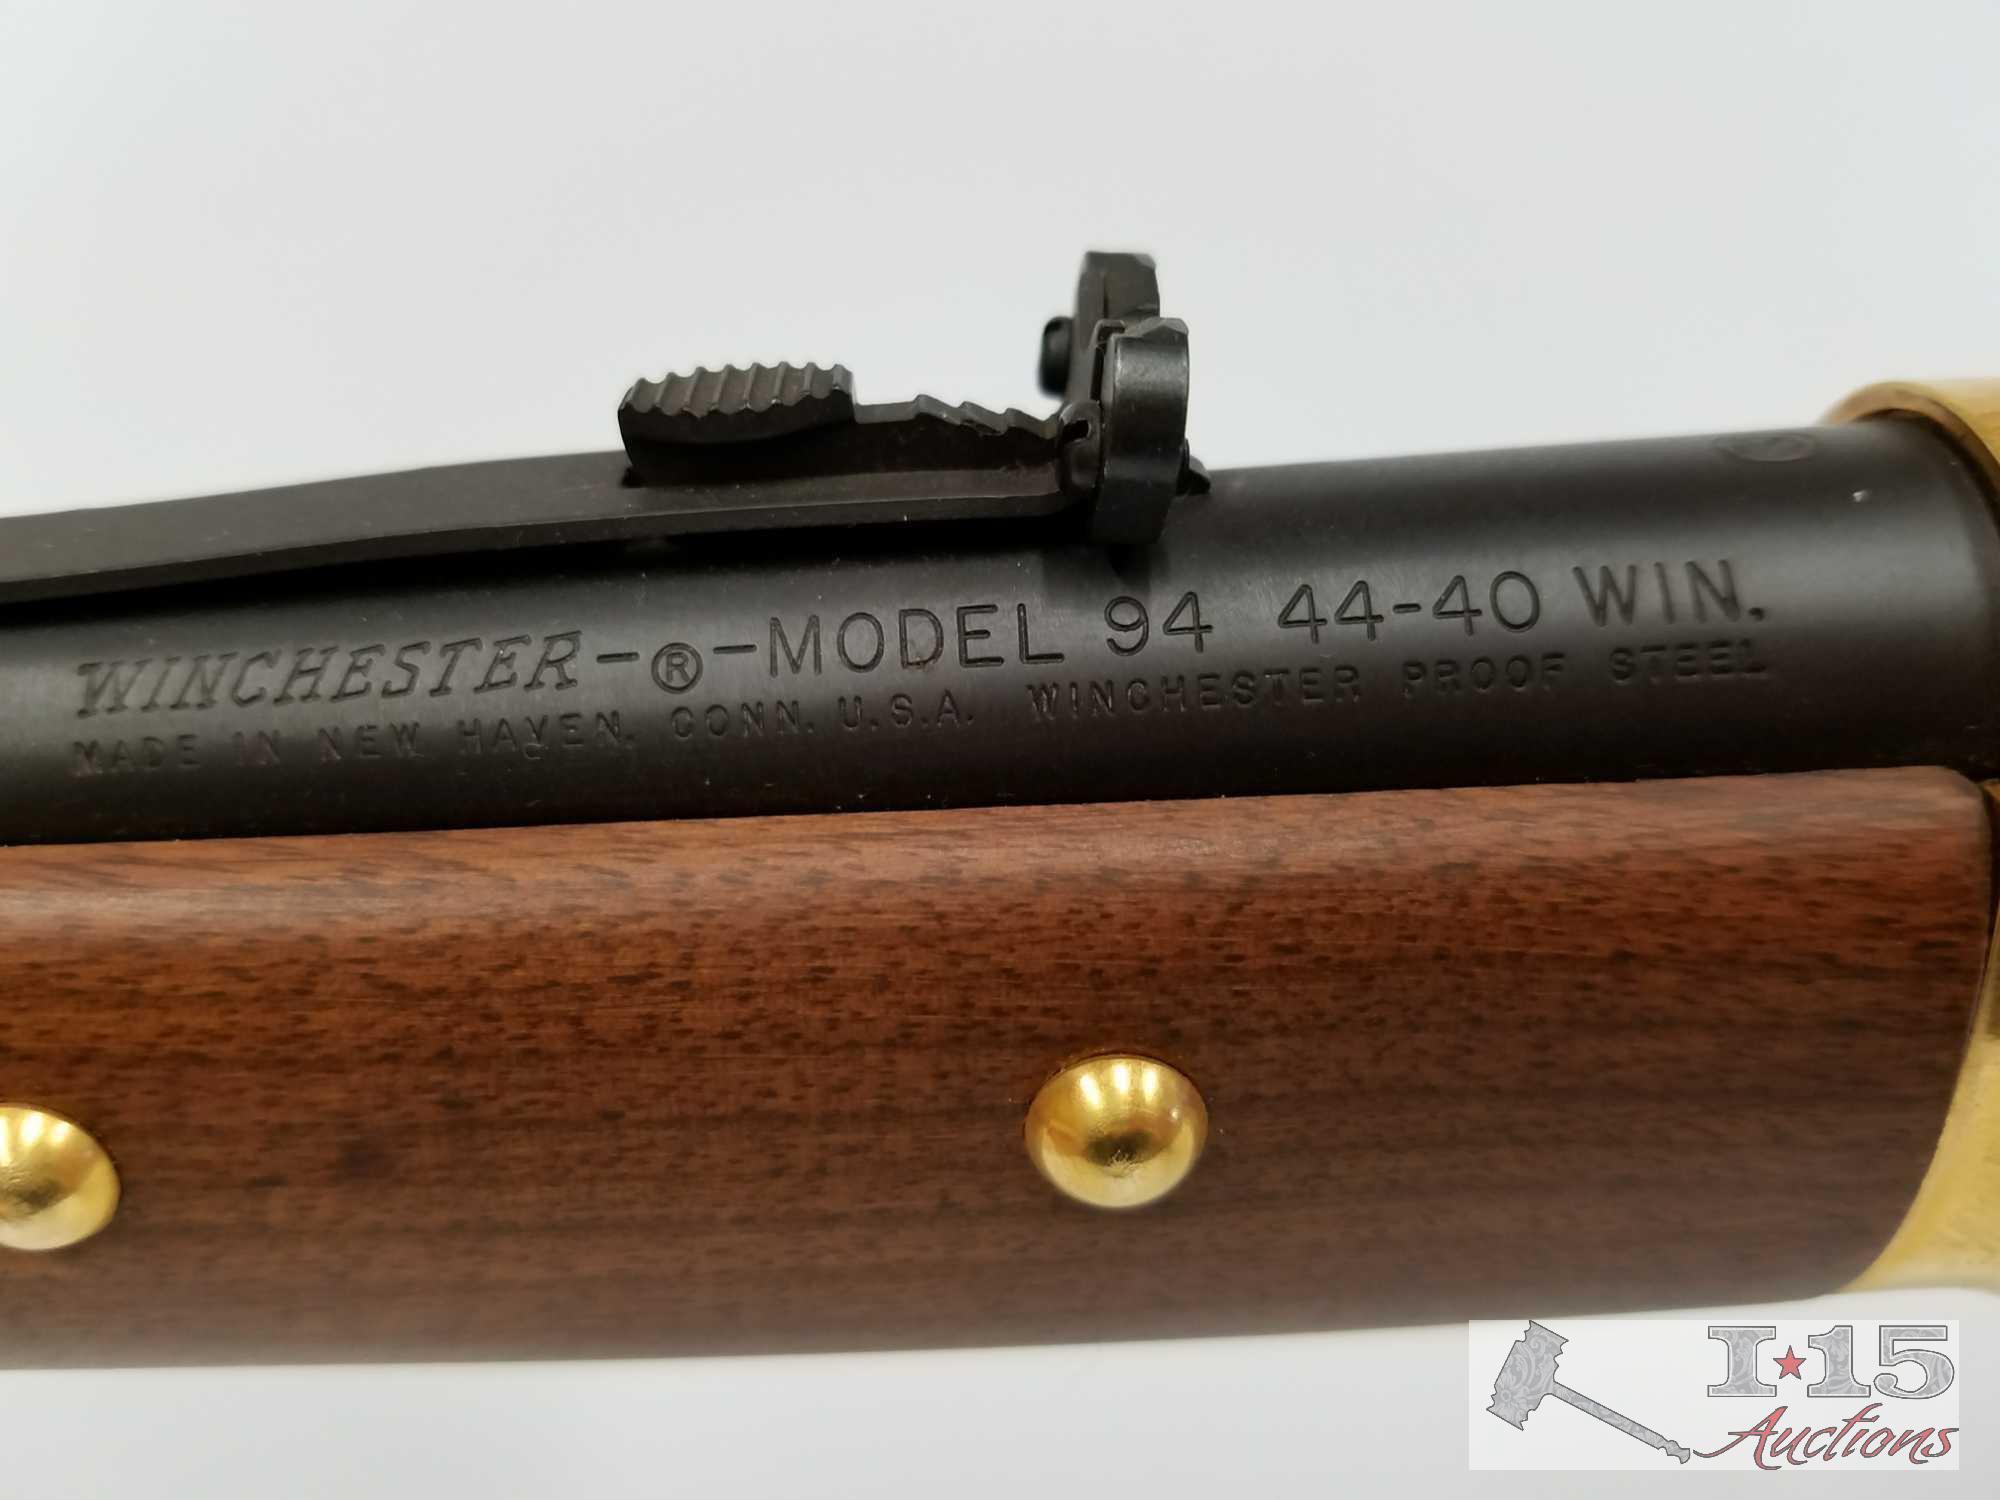 1977 Winchester Model 94 Cheyenne Carbine 44-40 cal.